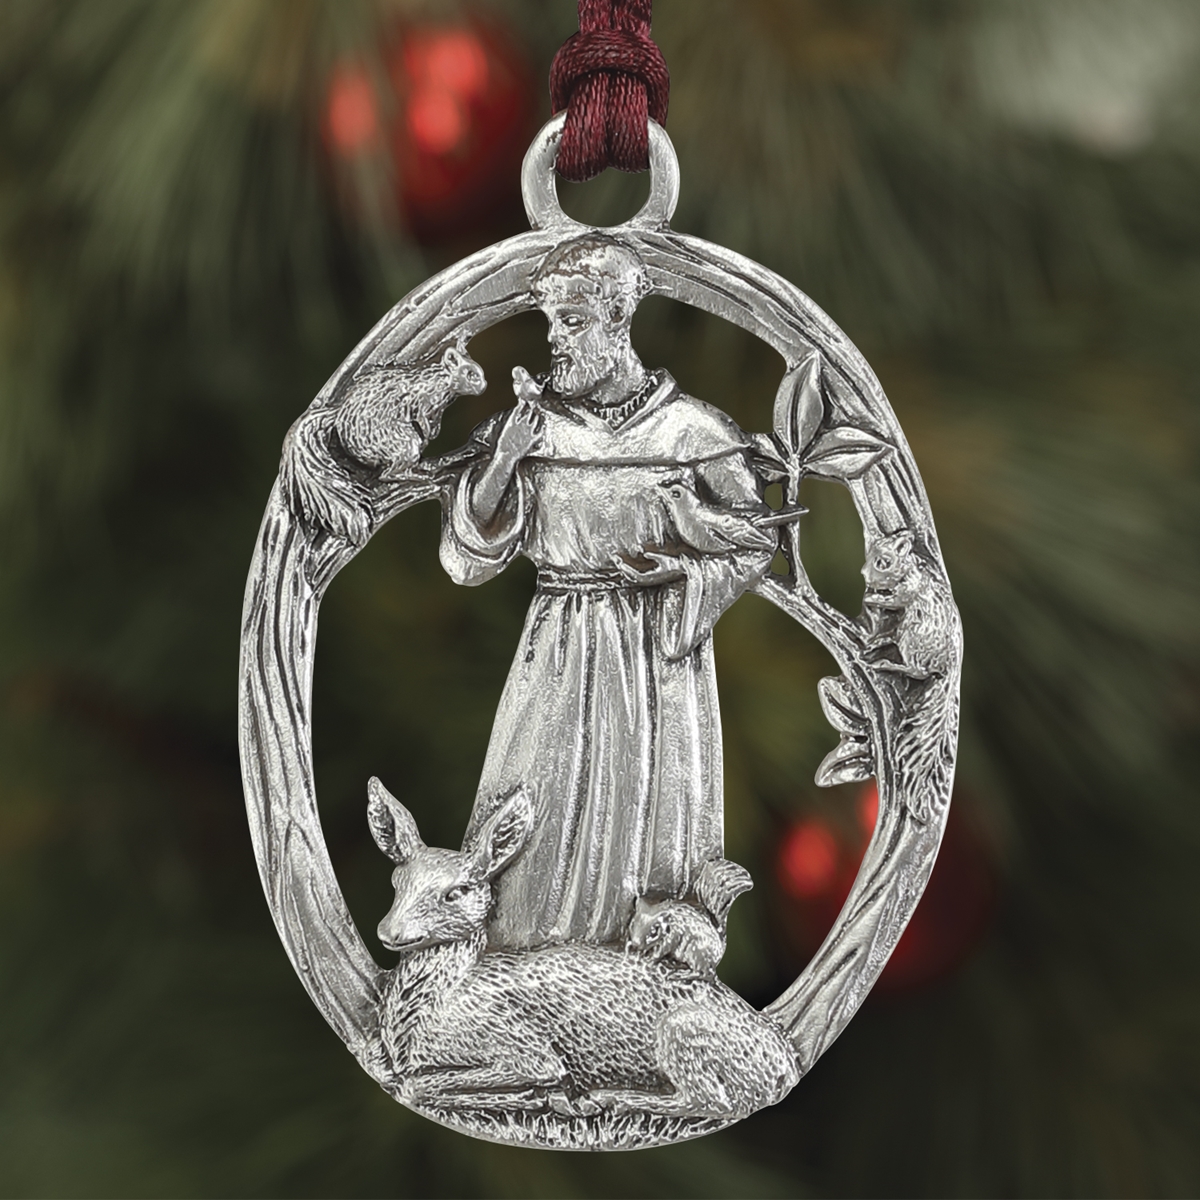 St Francis Plant a Tree Ornament